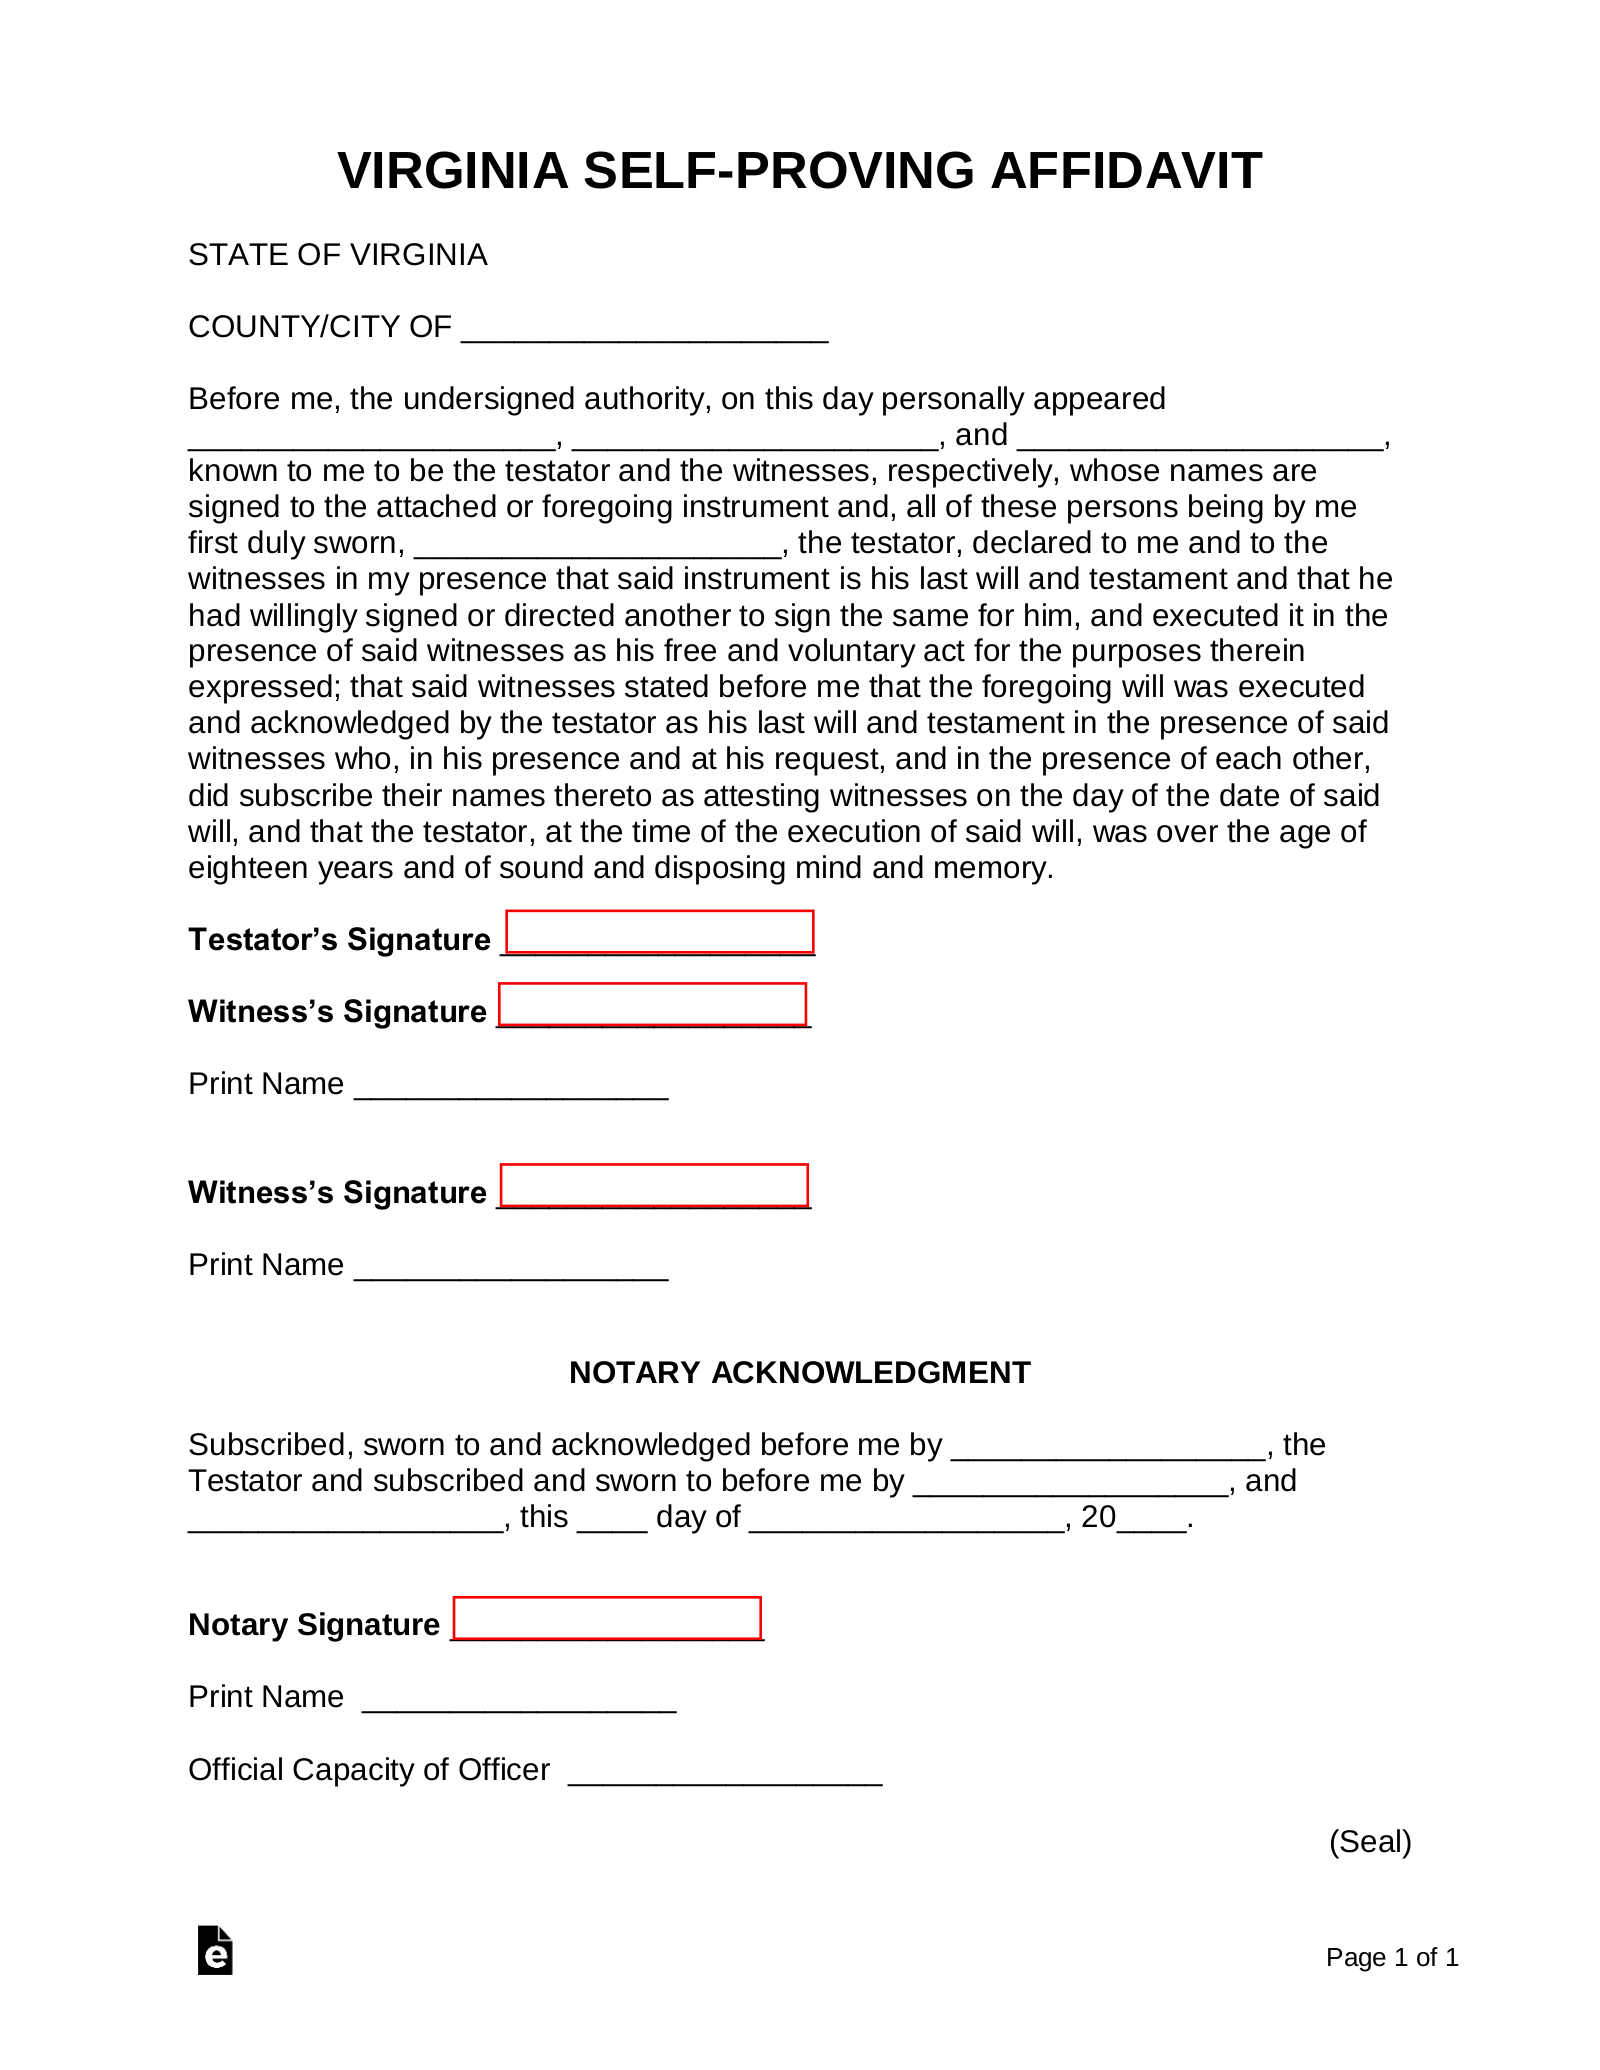 Virginia Self-Proving Affidavit Form